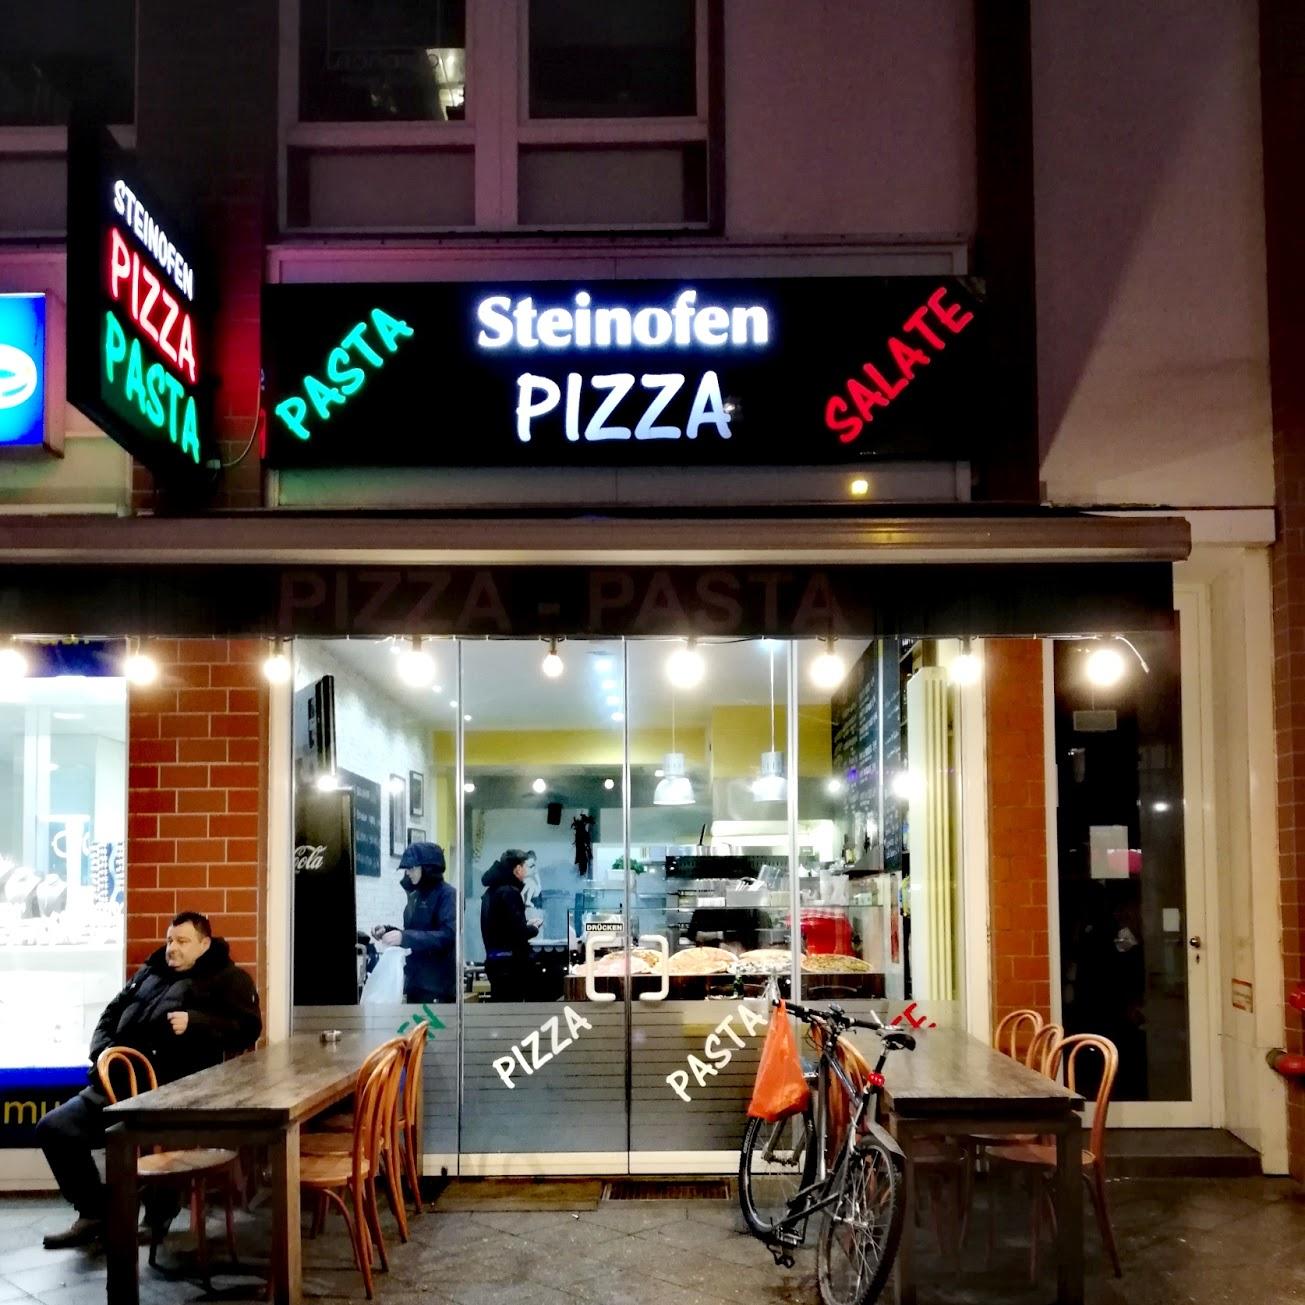 Restaurant "Steinofen Pizza - Pizza, Pasta, Salate" in Berlin